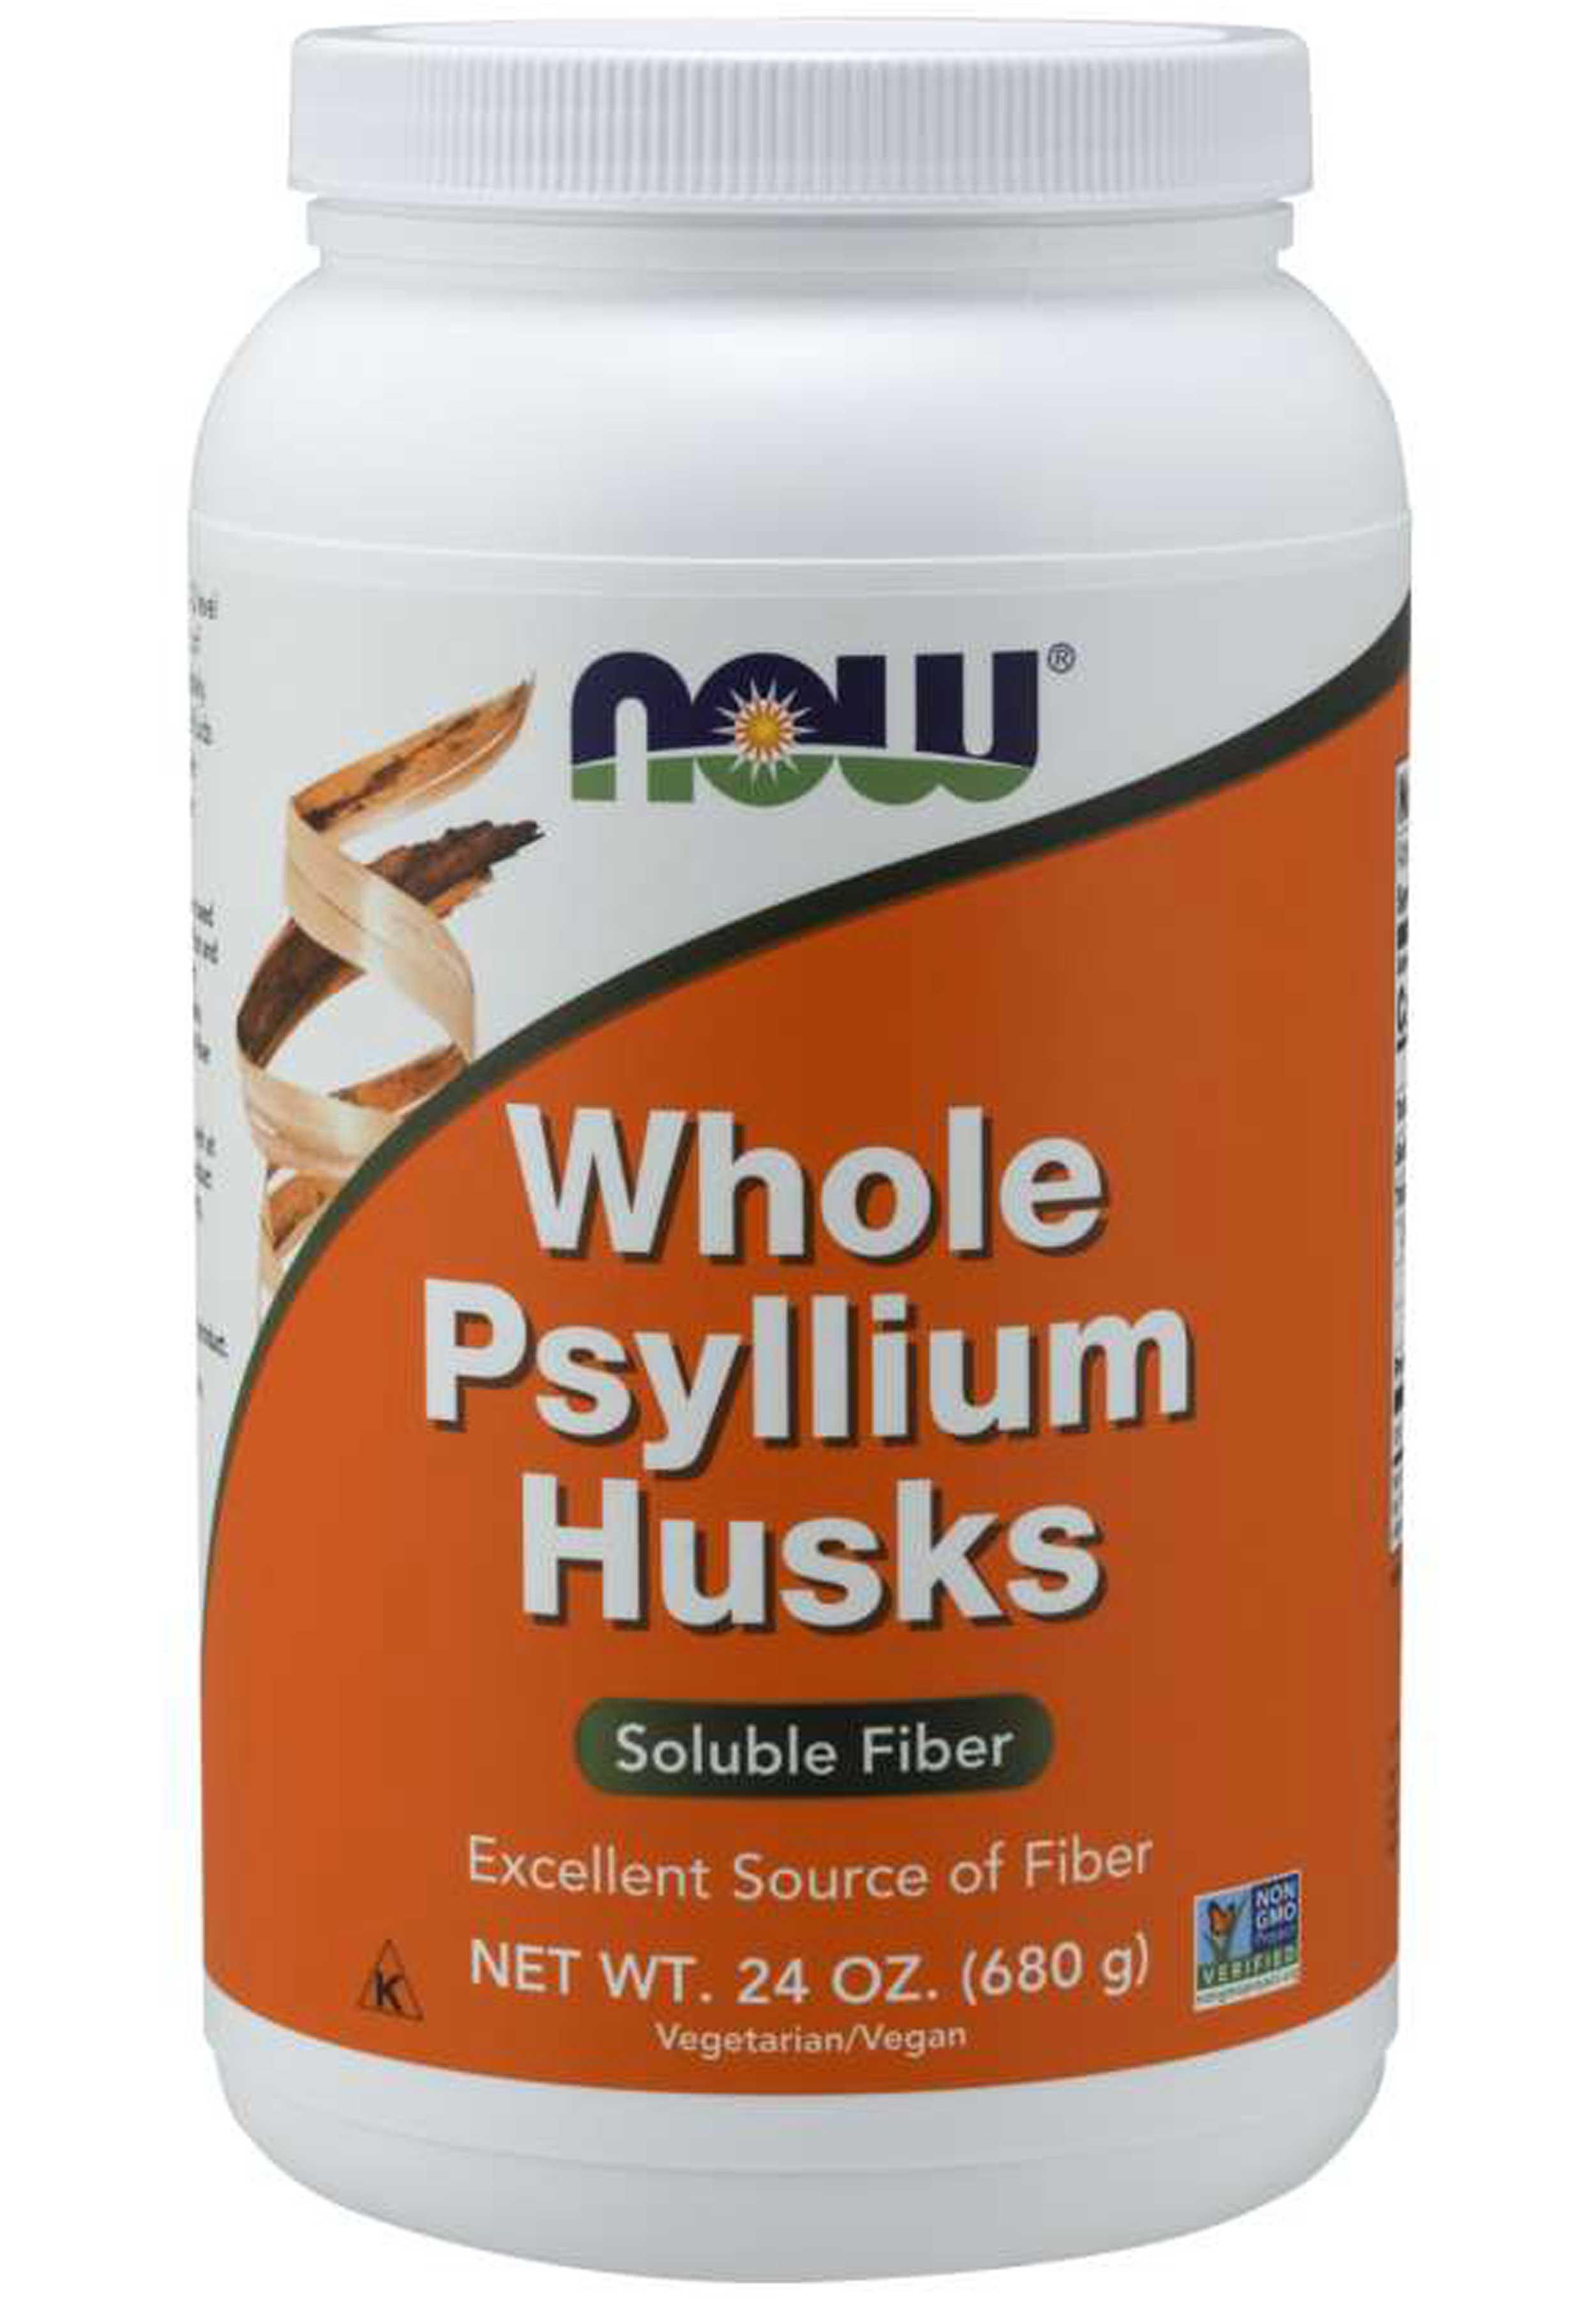 NOW Whole Psyllium Husk